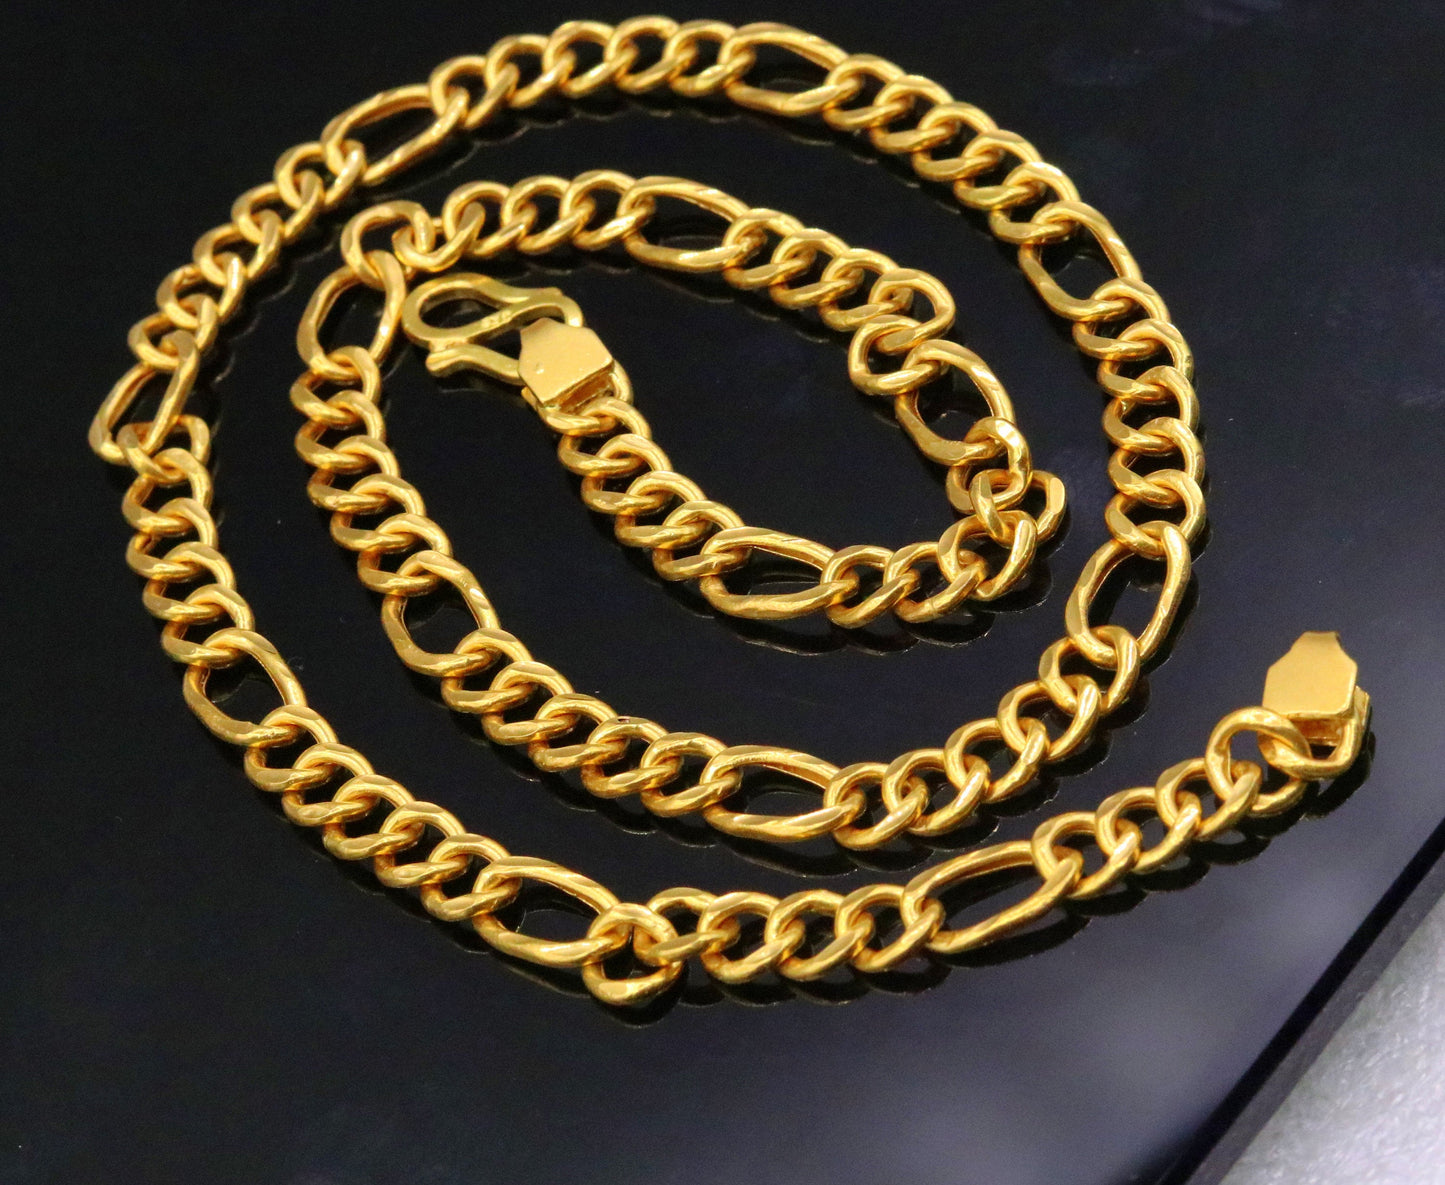 22karat yellow gold handmade fabulous figaro link chain, new stylish certified royal chain necklace jewelry - TRIBAL ORNAMENTS